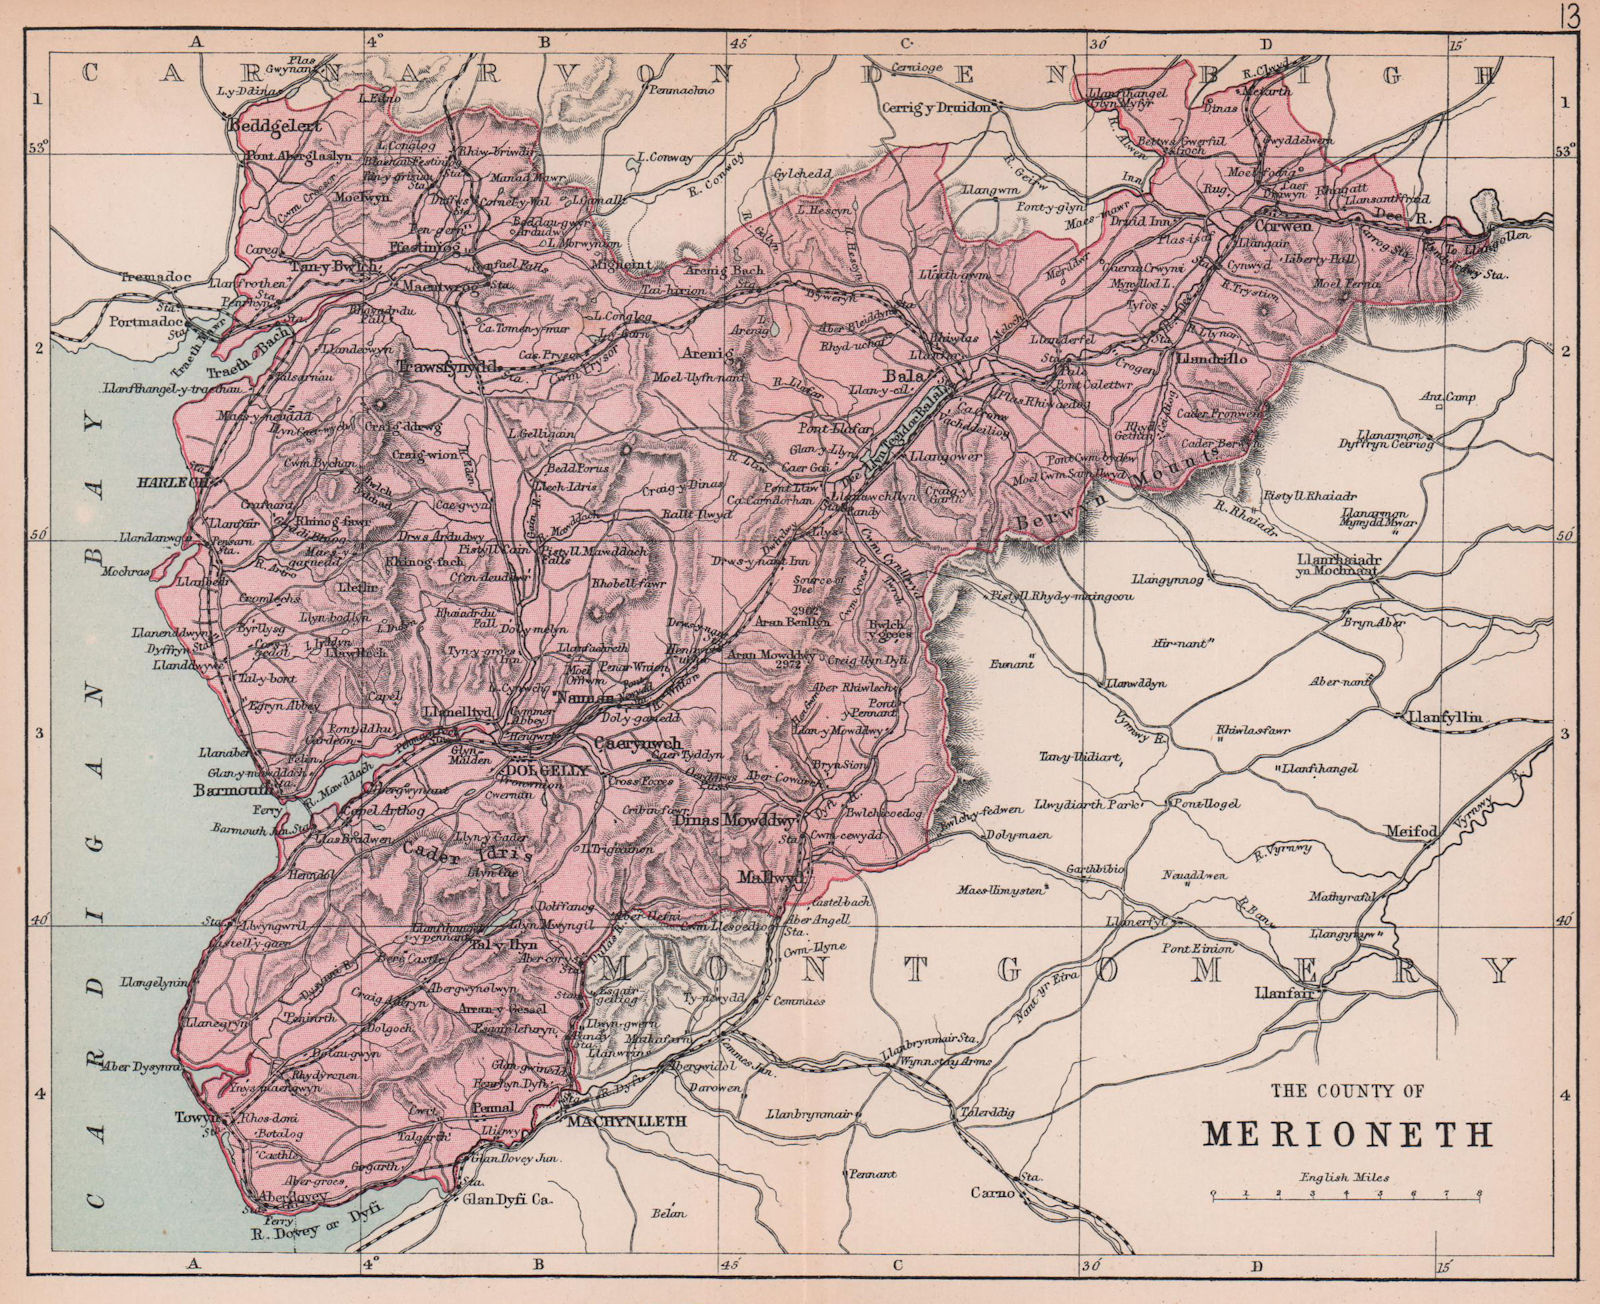 MERIONETHSHIRE "County of Merioneth" Barmouth Tywyn Wales BARTHOLOMEW 1882 map